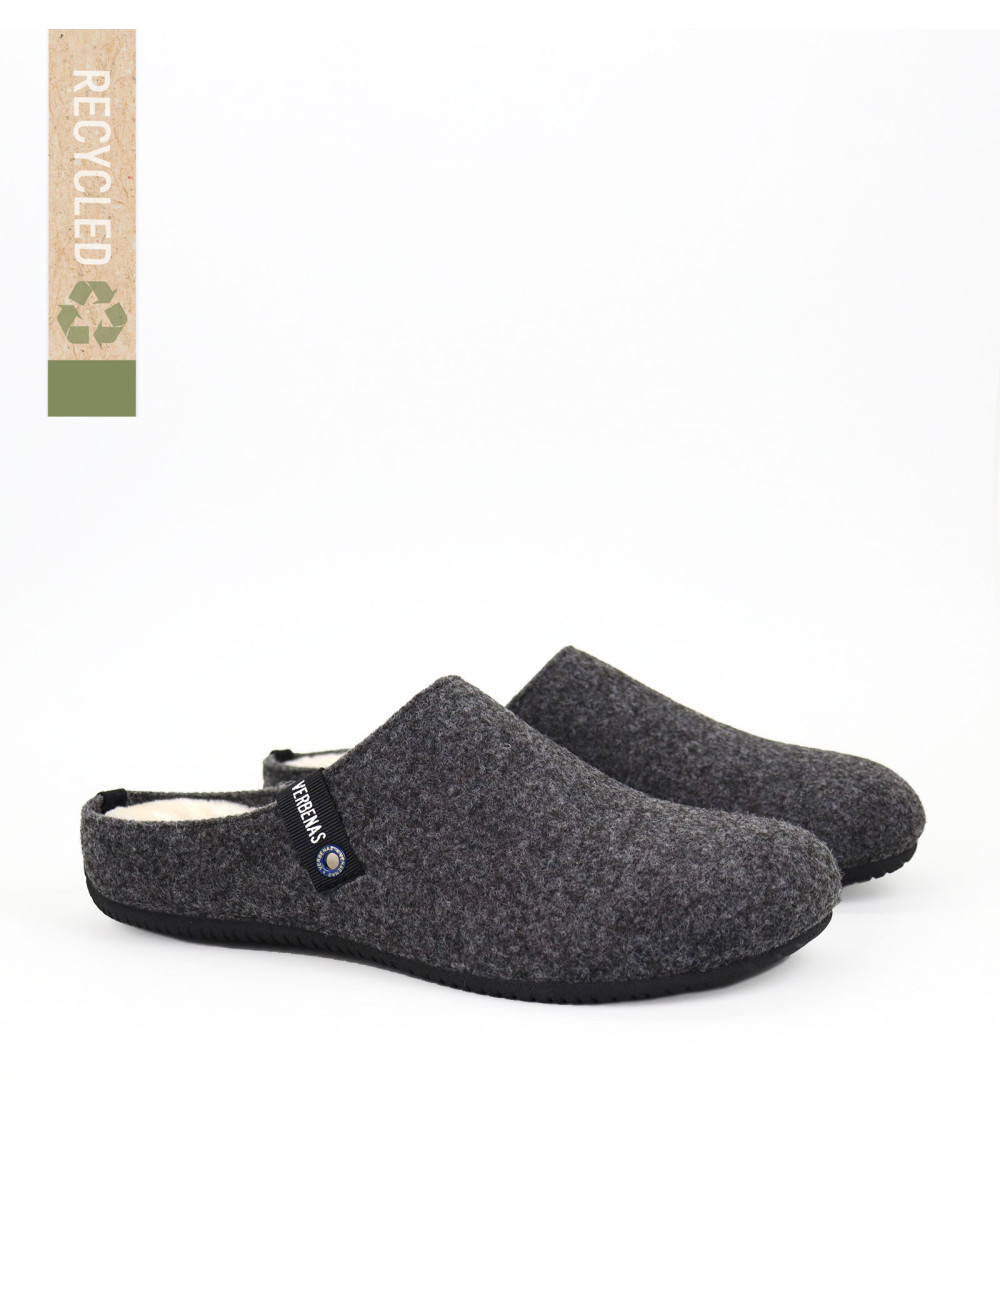 Wool felt slipper | Buy low felt slippers